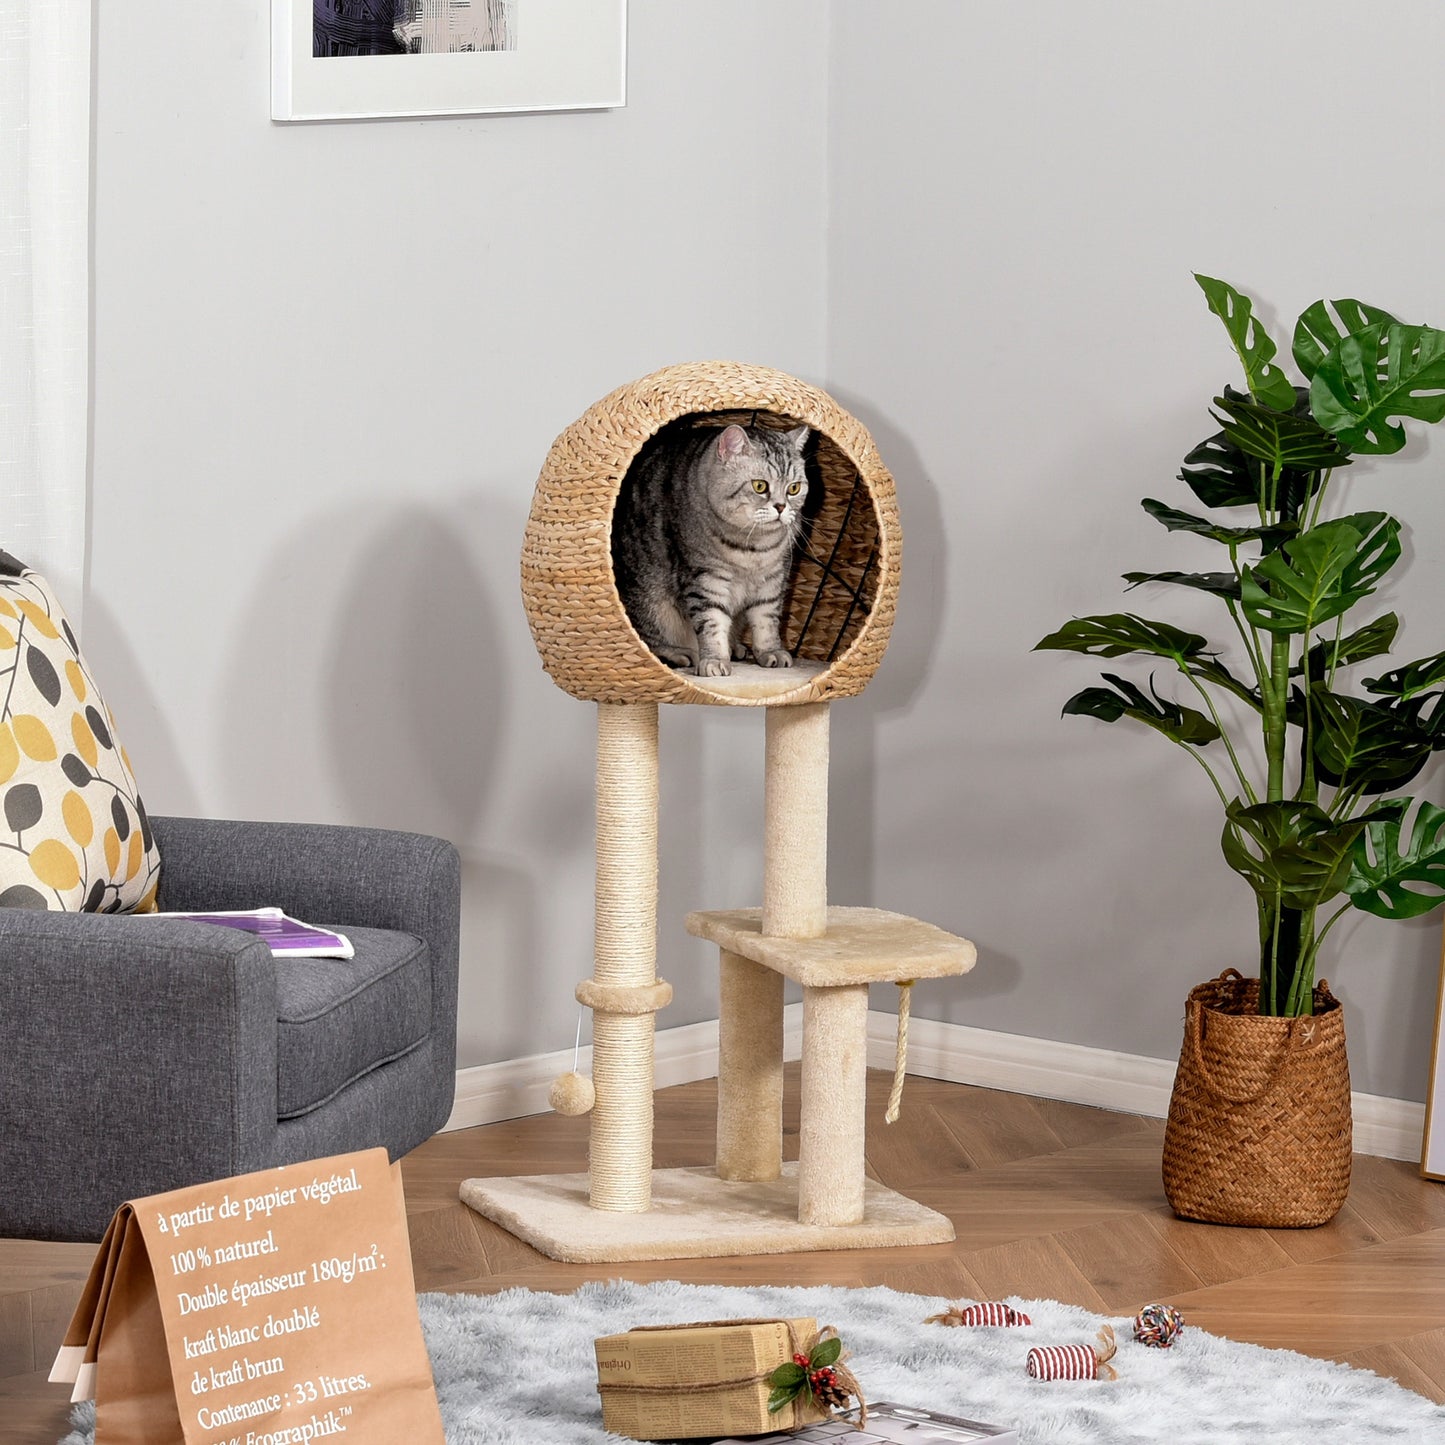 PawHut Cat Tree Tower Activity Center w/ Posts Condo Ball Cushion Perch Cattail Fluff